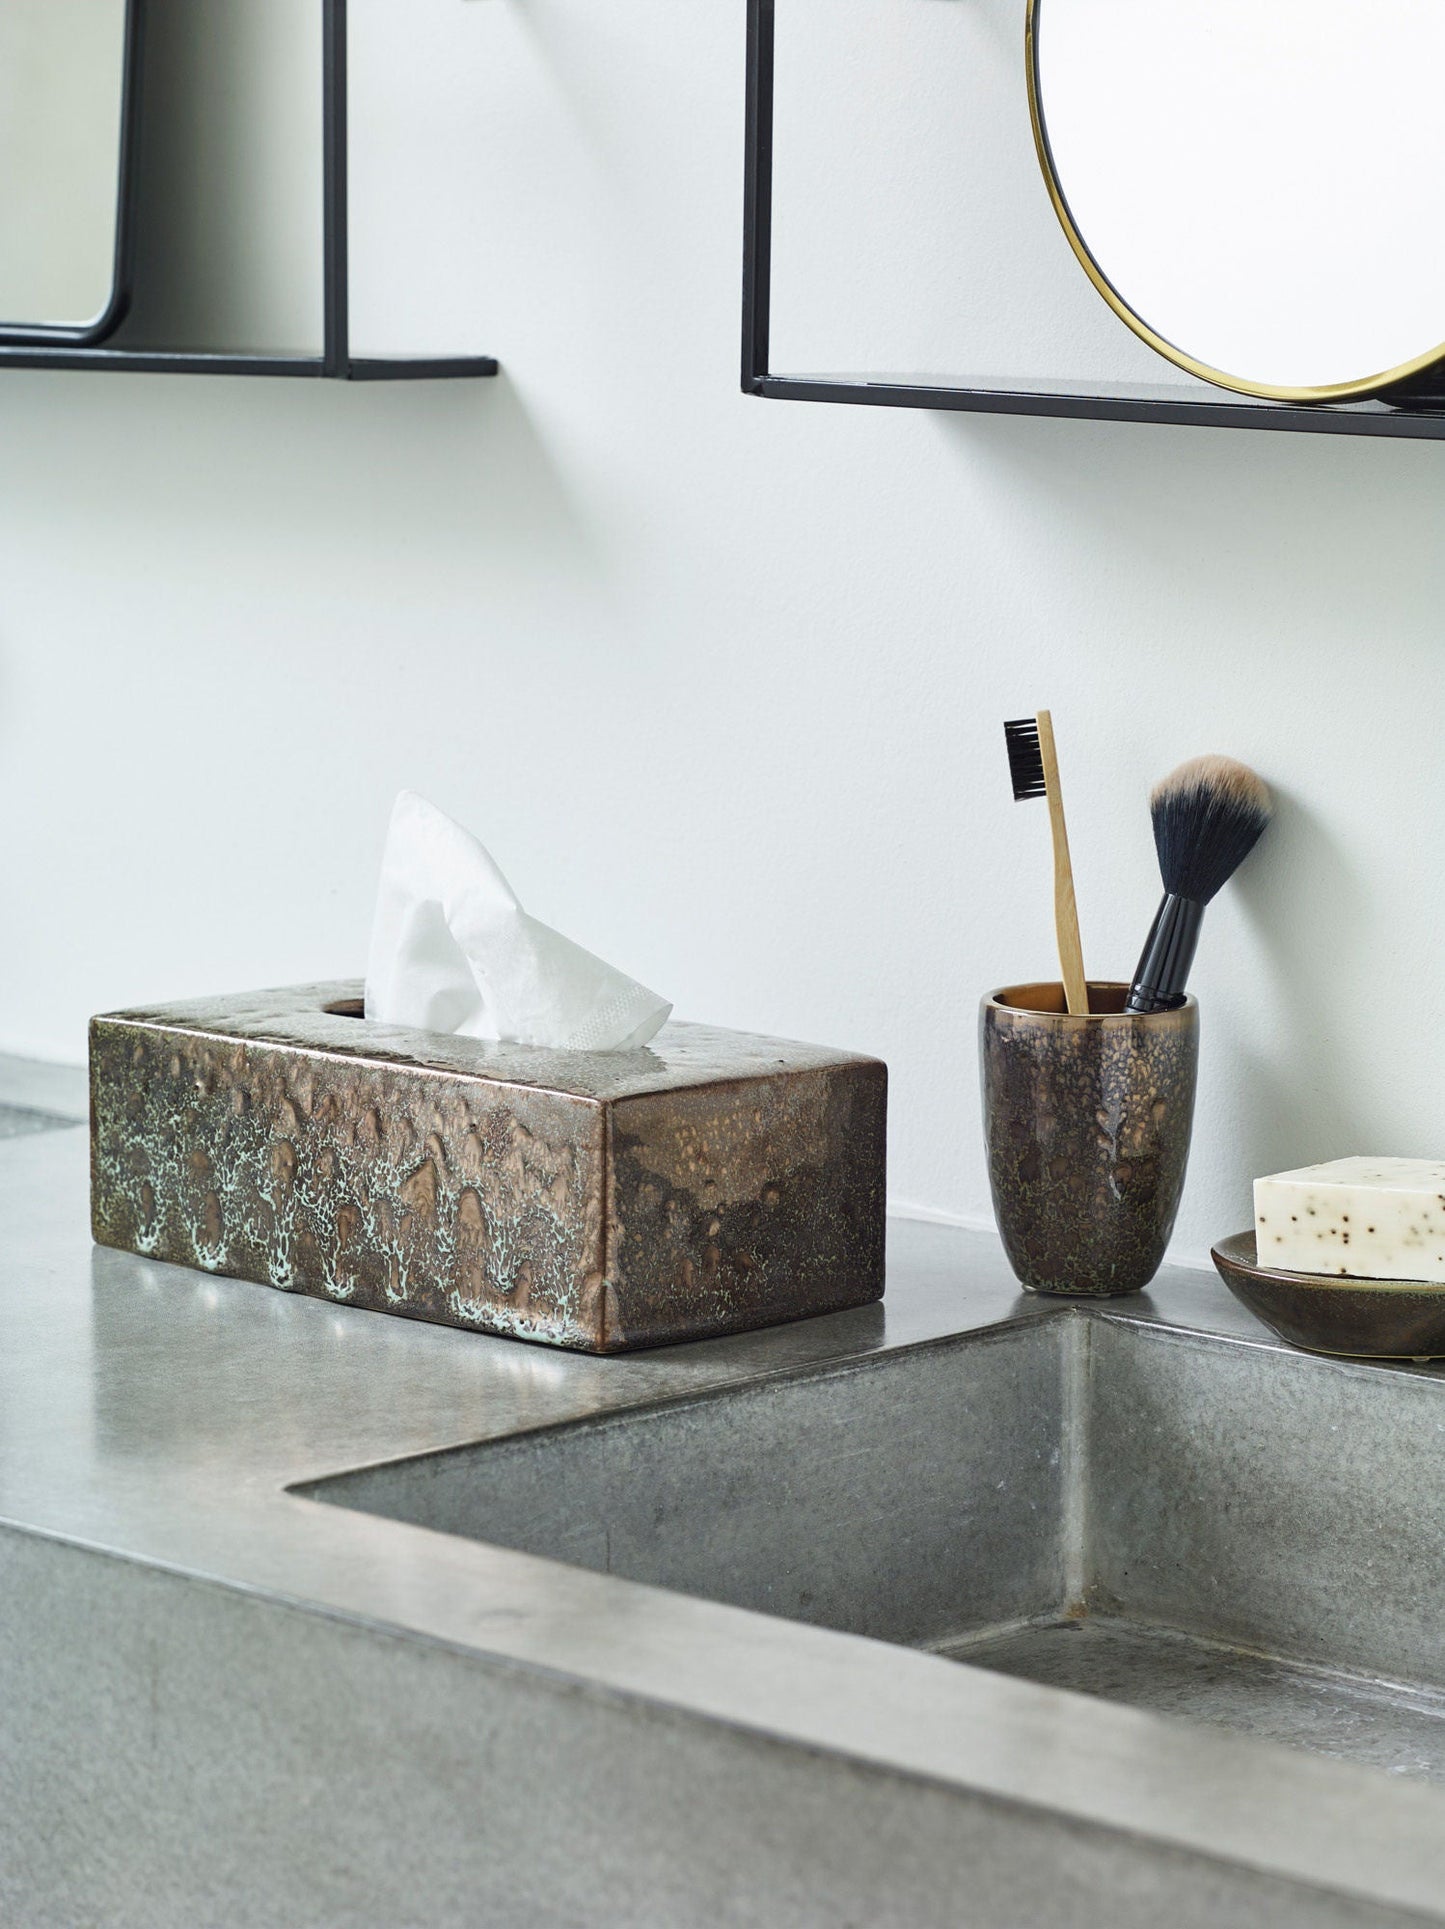 Vintage Bronze Soap Dish Holder - |VESIMI Design| Luxury and Rustic bathrooms online